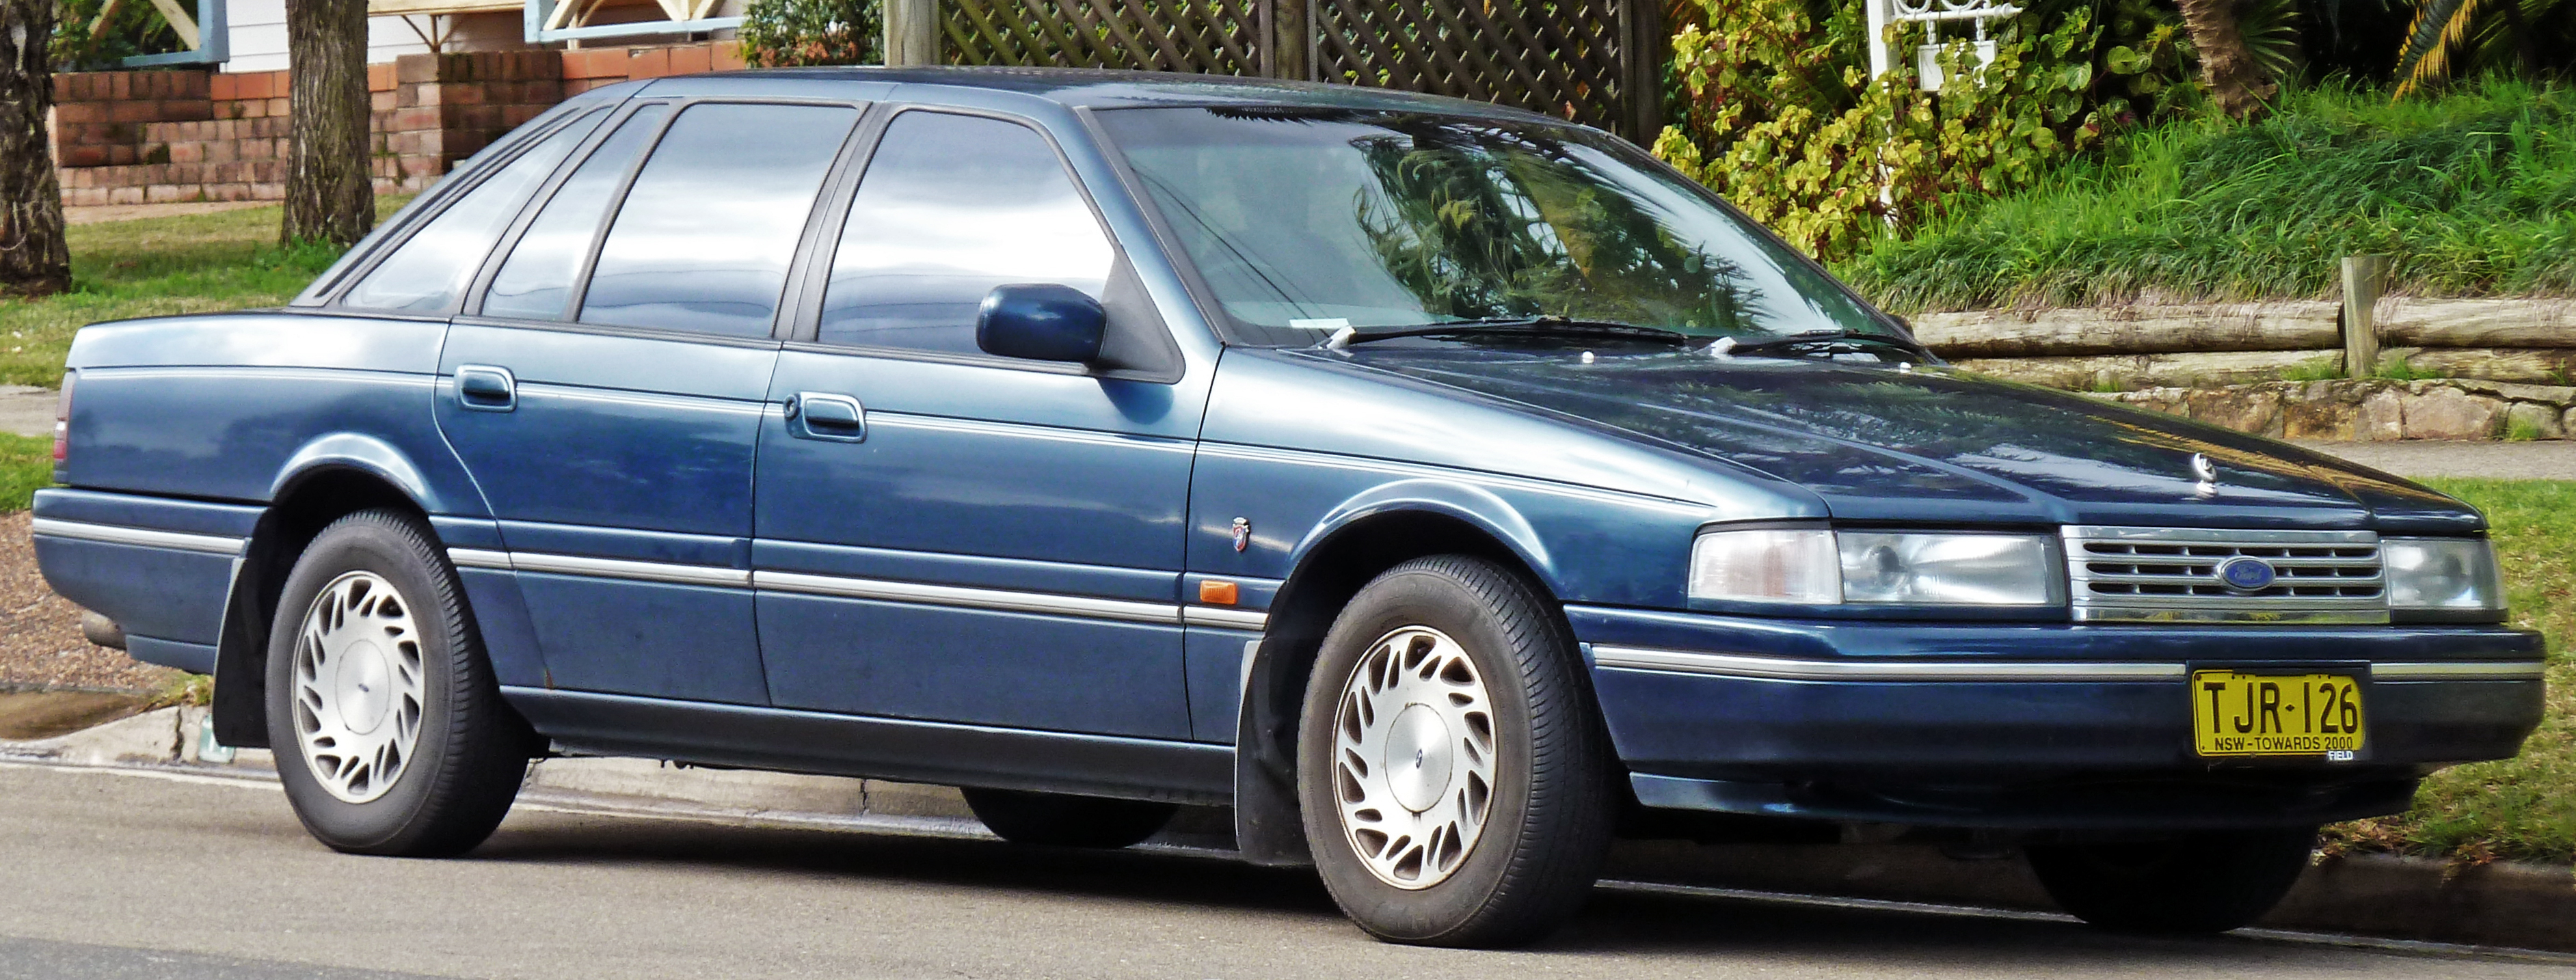 1994 Ford NC II Fairlane Ghia sedan 01